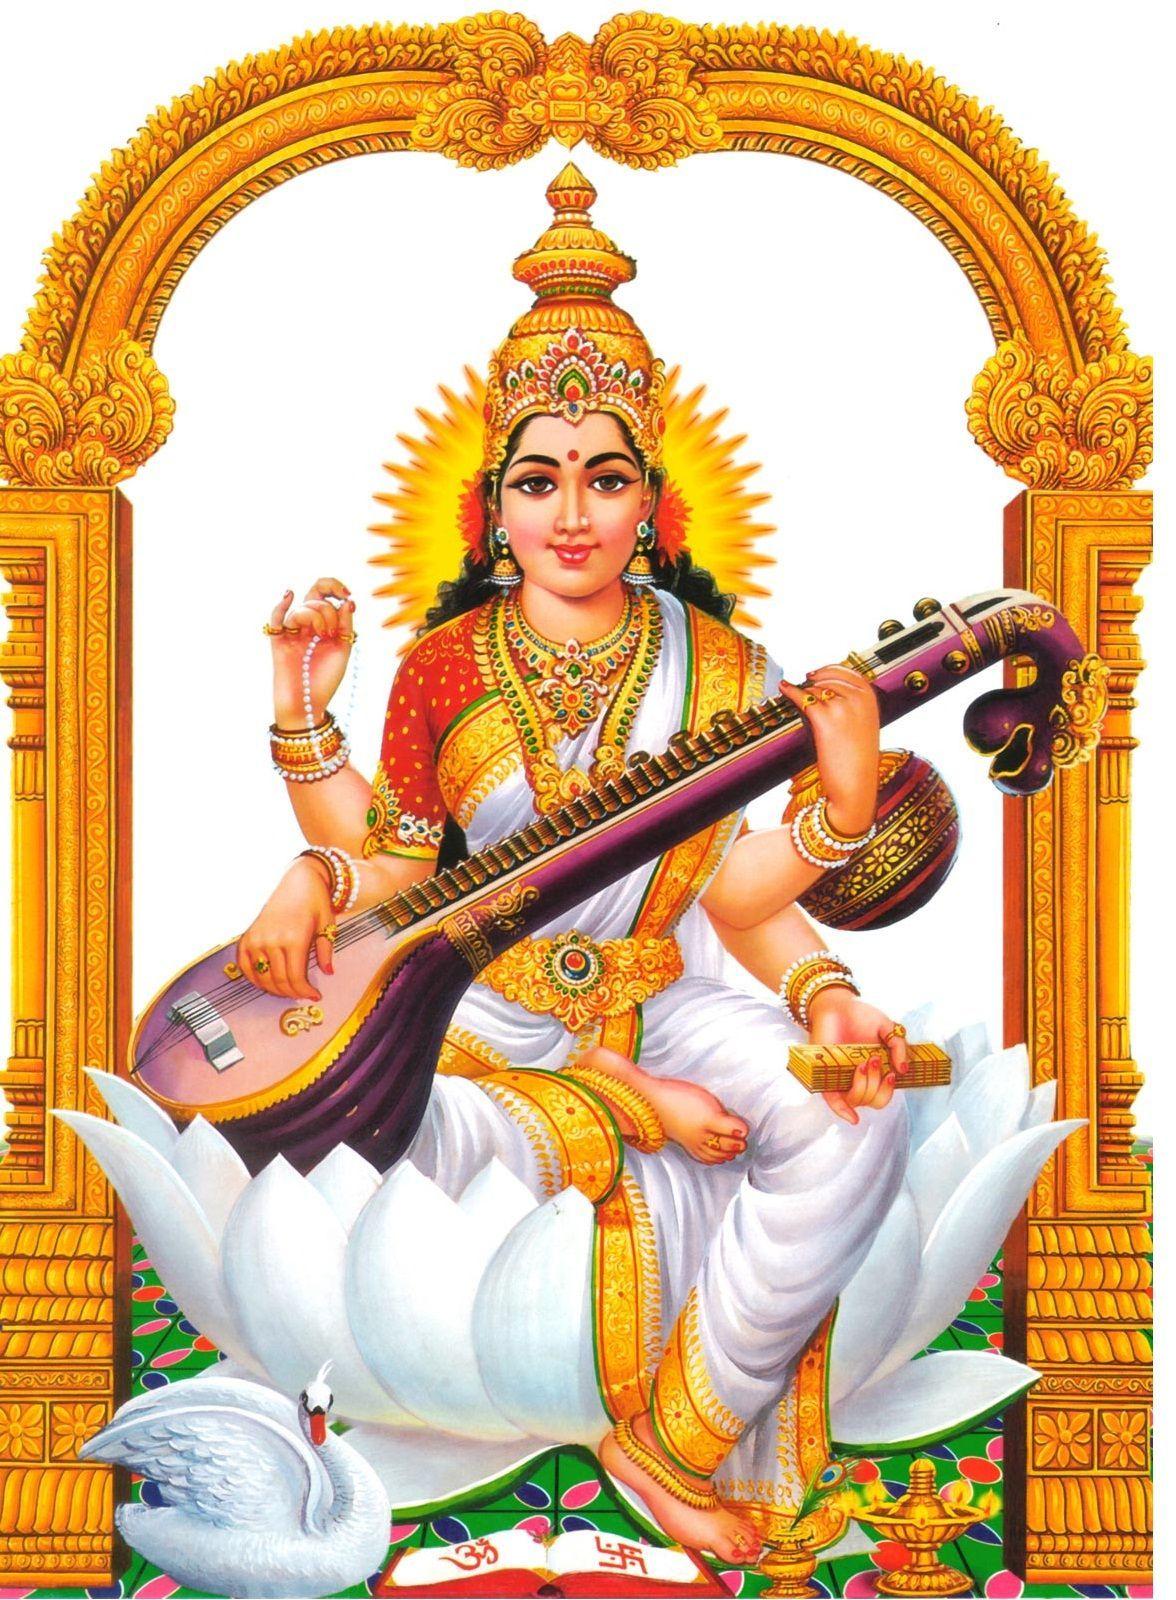 Hindu God Wallpaper for Mobile Phones, God Image HD Photo